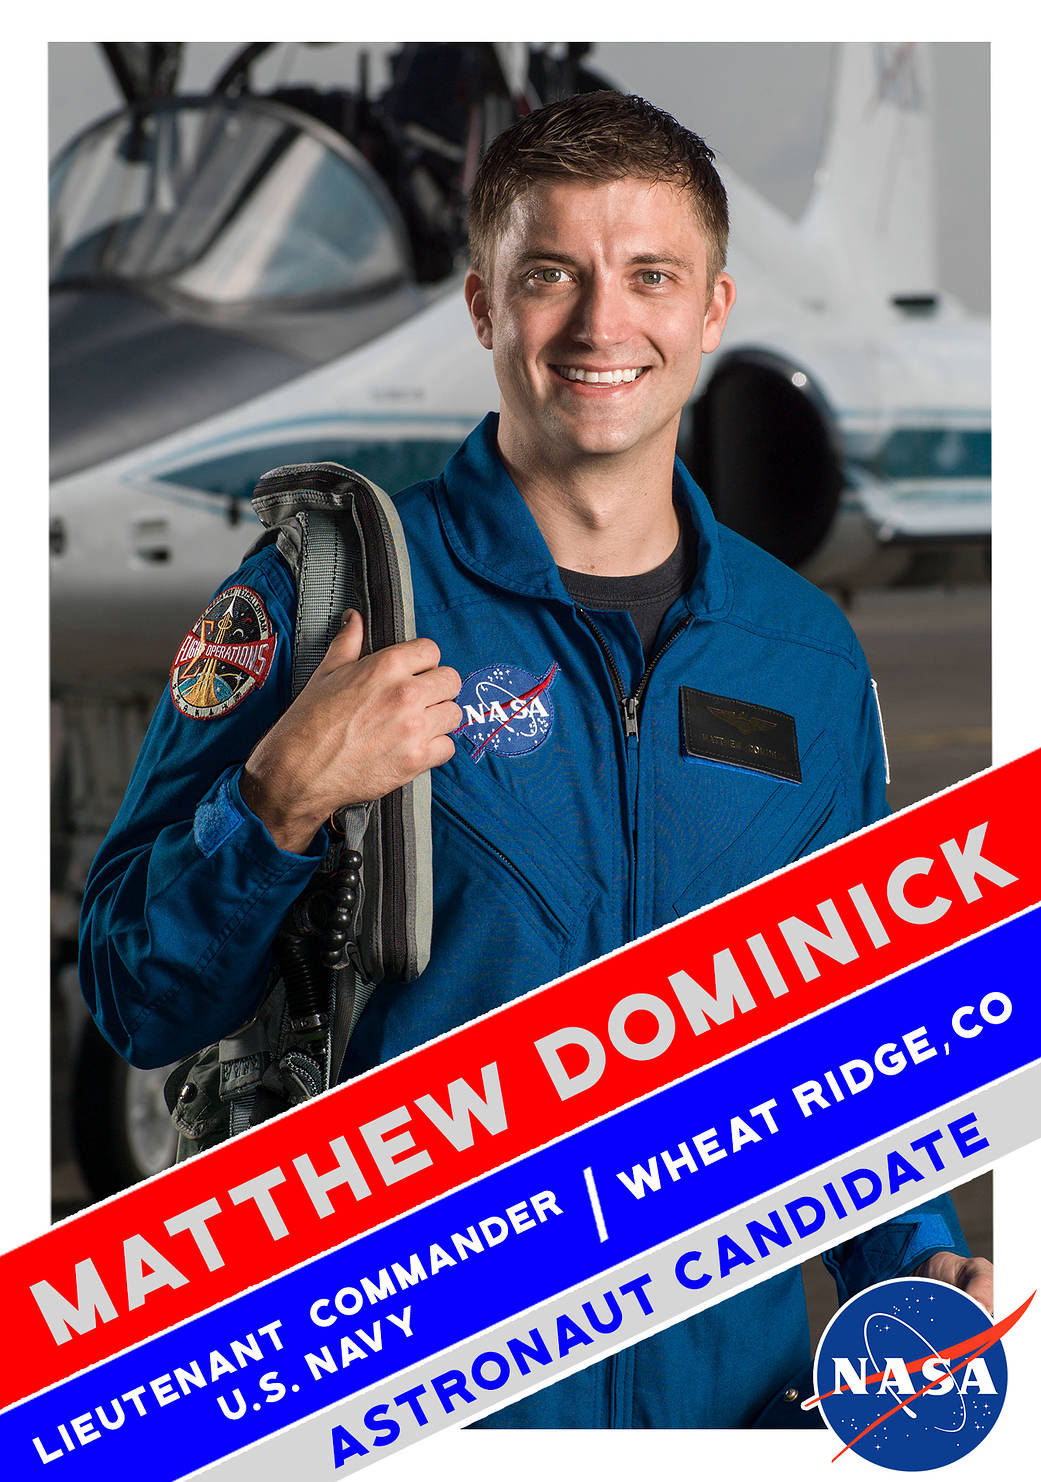 Astronaut Candidate Matthew Dominick